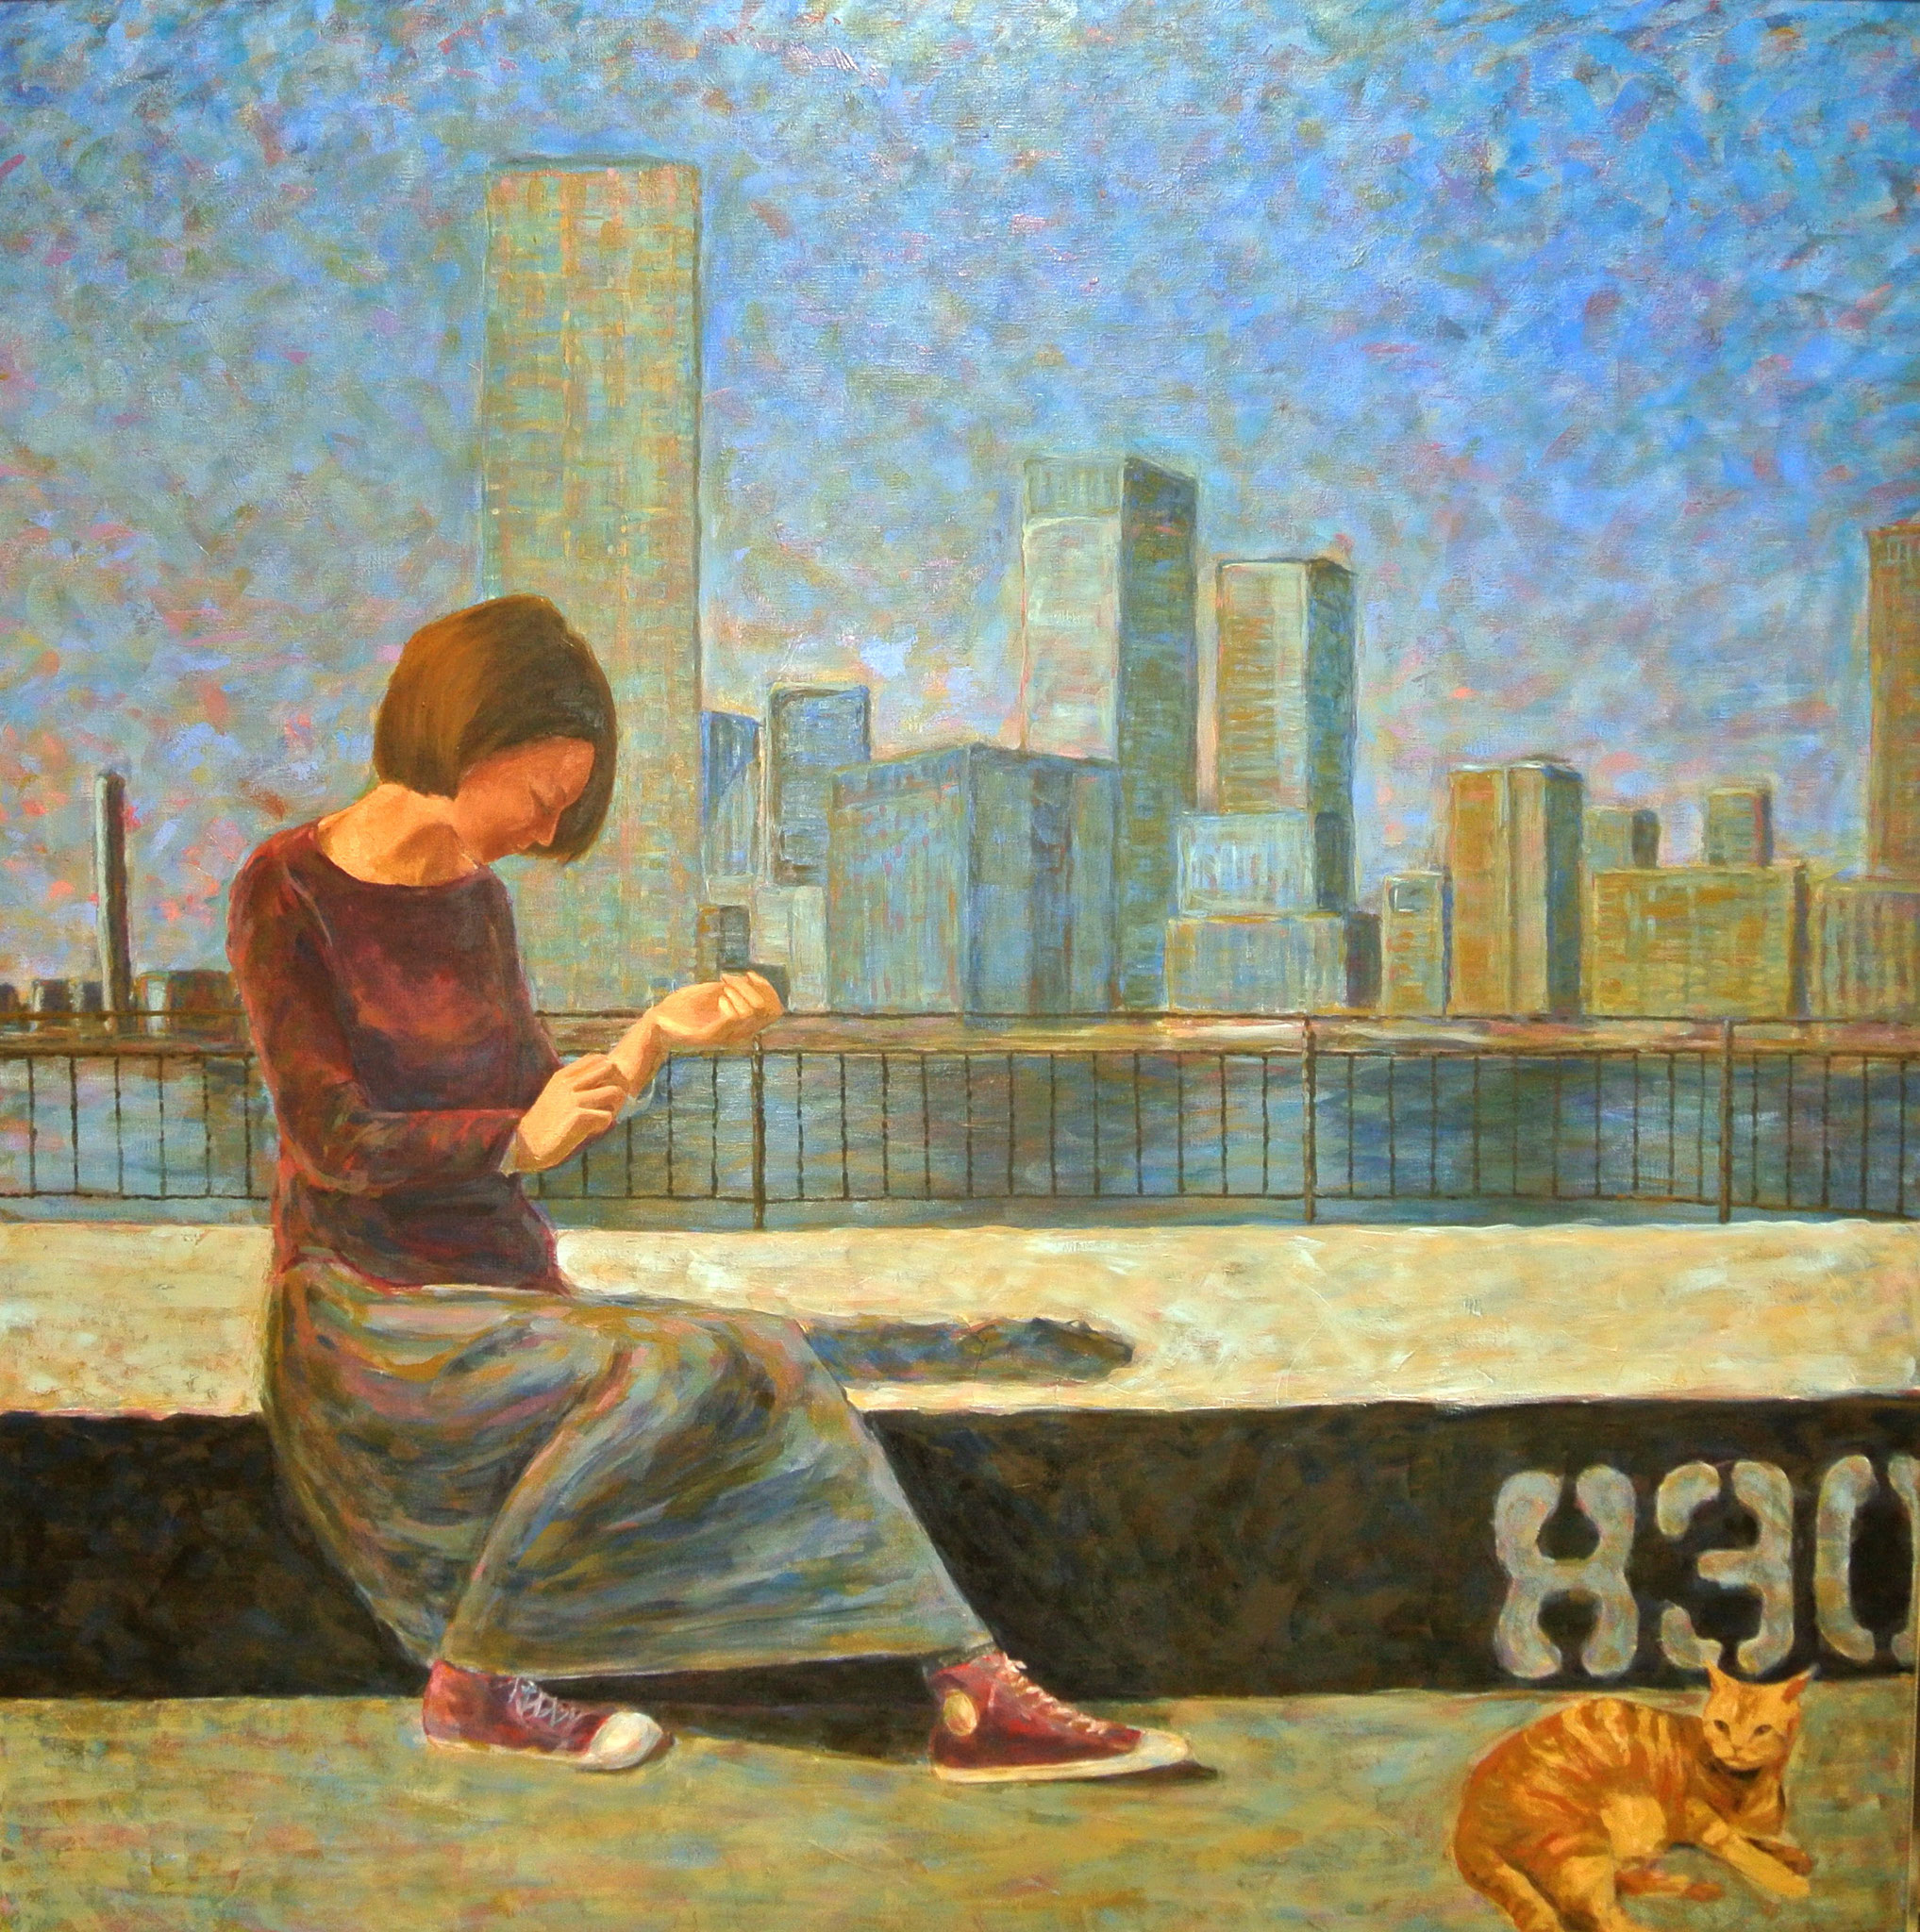 2014 1,620×1,620 Oil on canvas